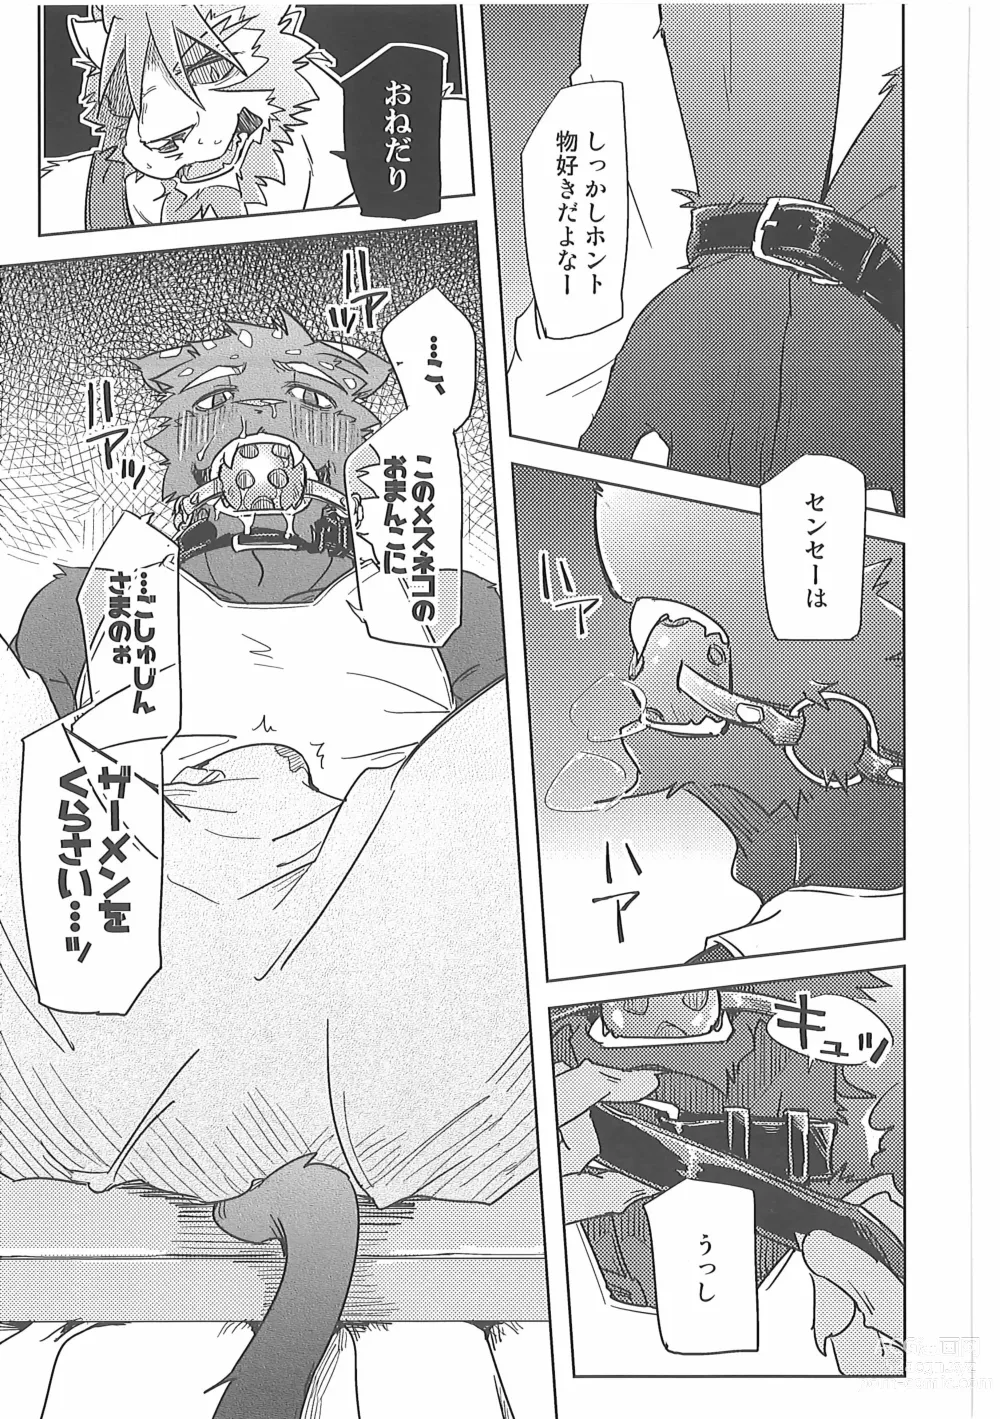 Page 16 of doujinshi Crazy Waltz